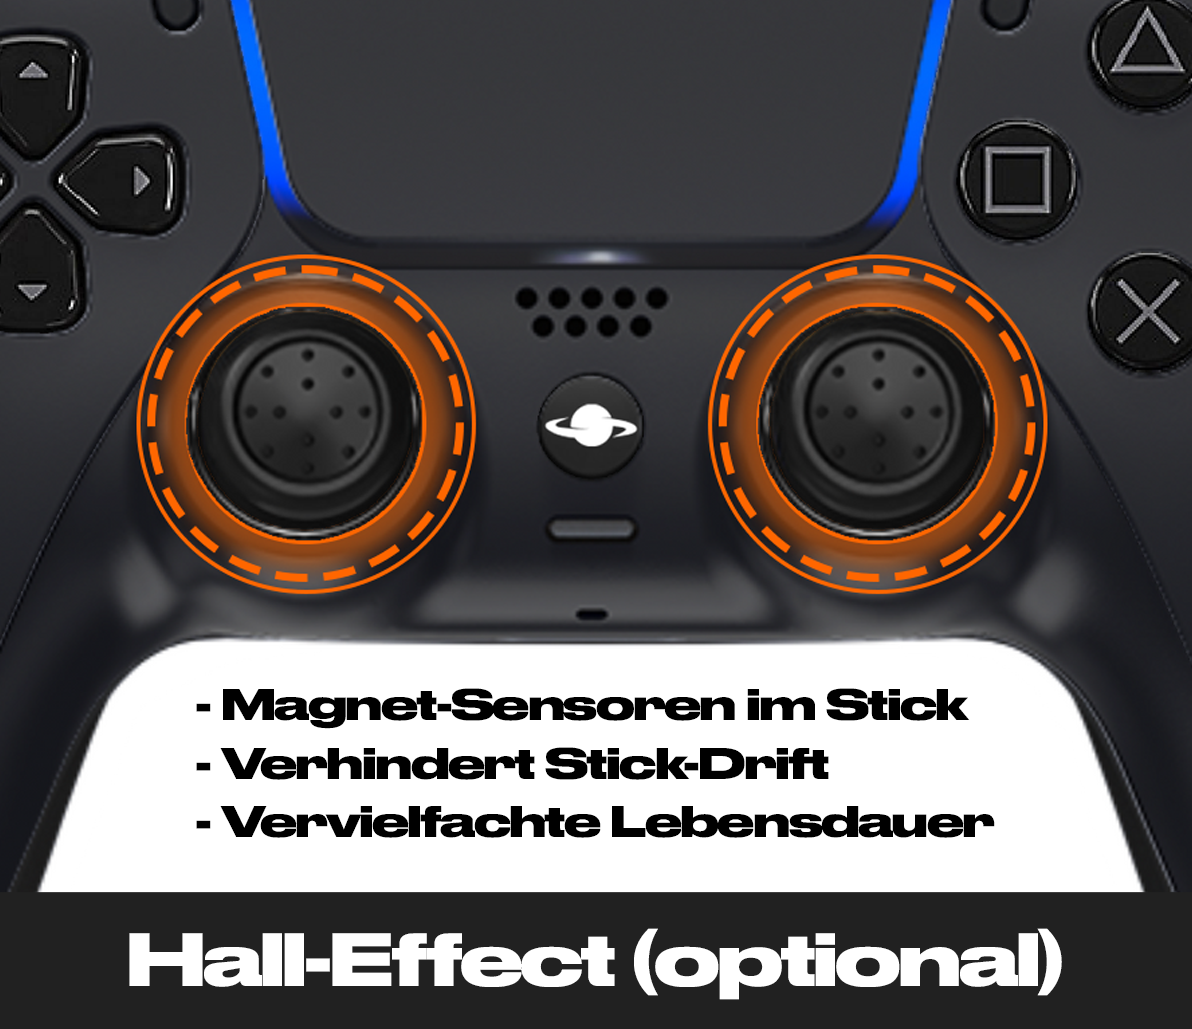 PS5 Custom Controller 'Transparent'